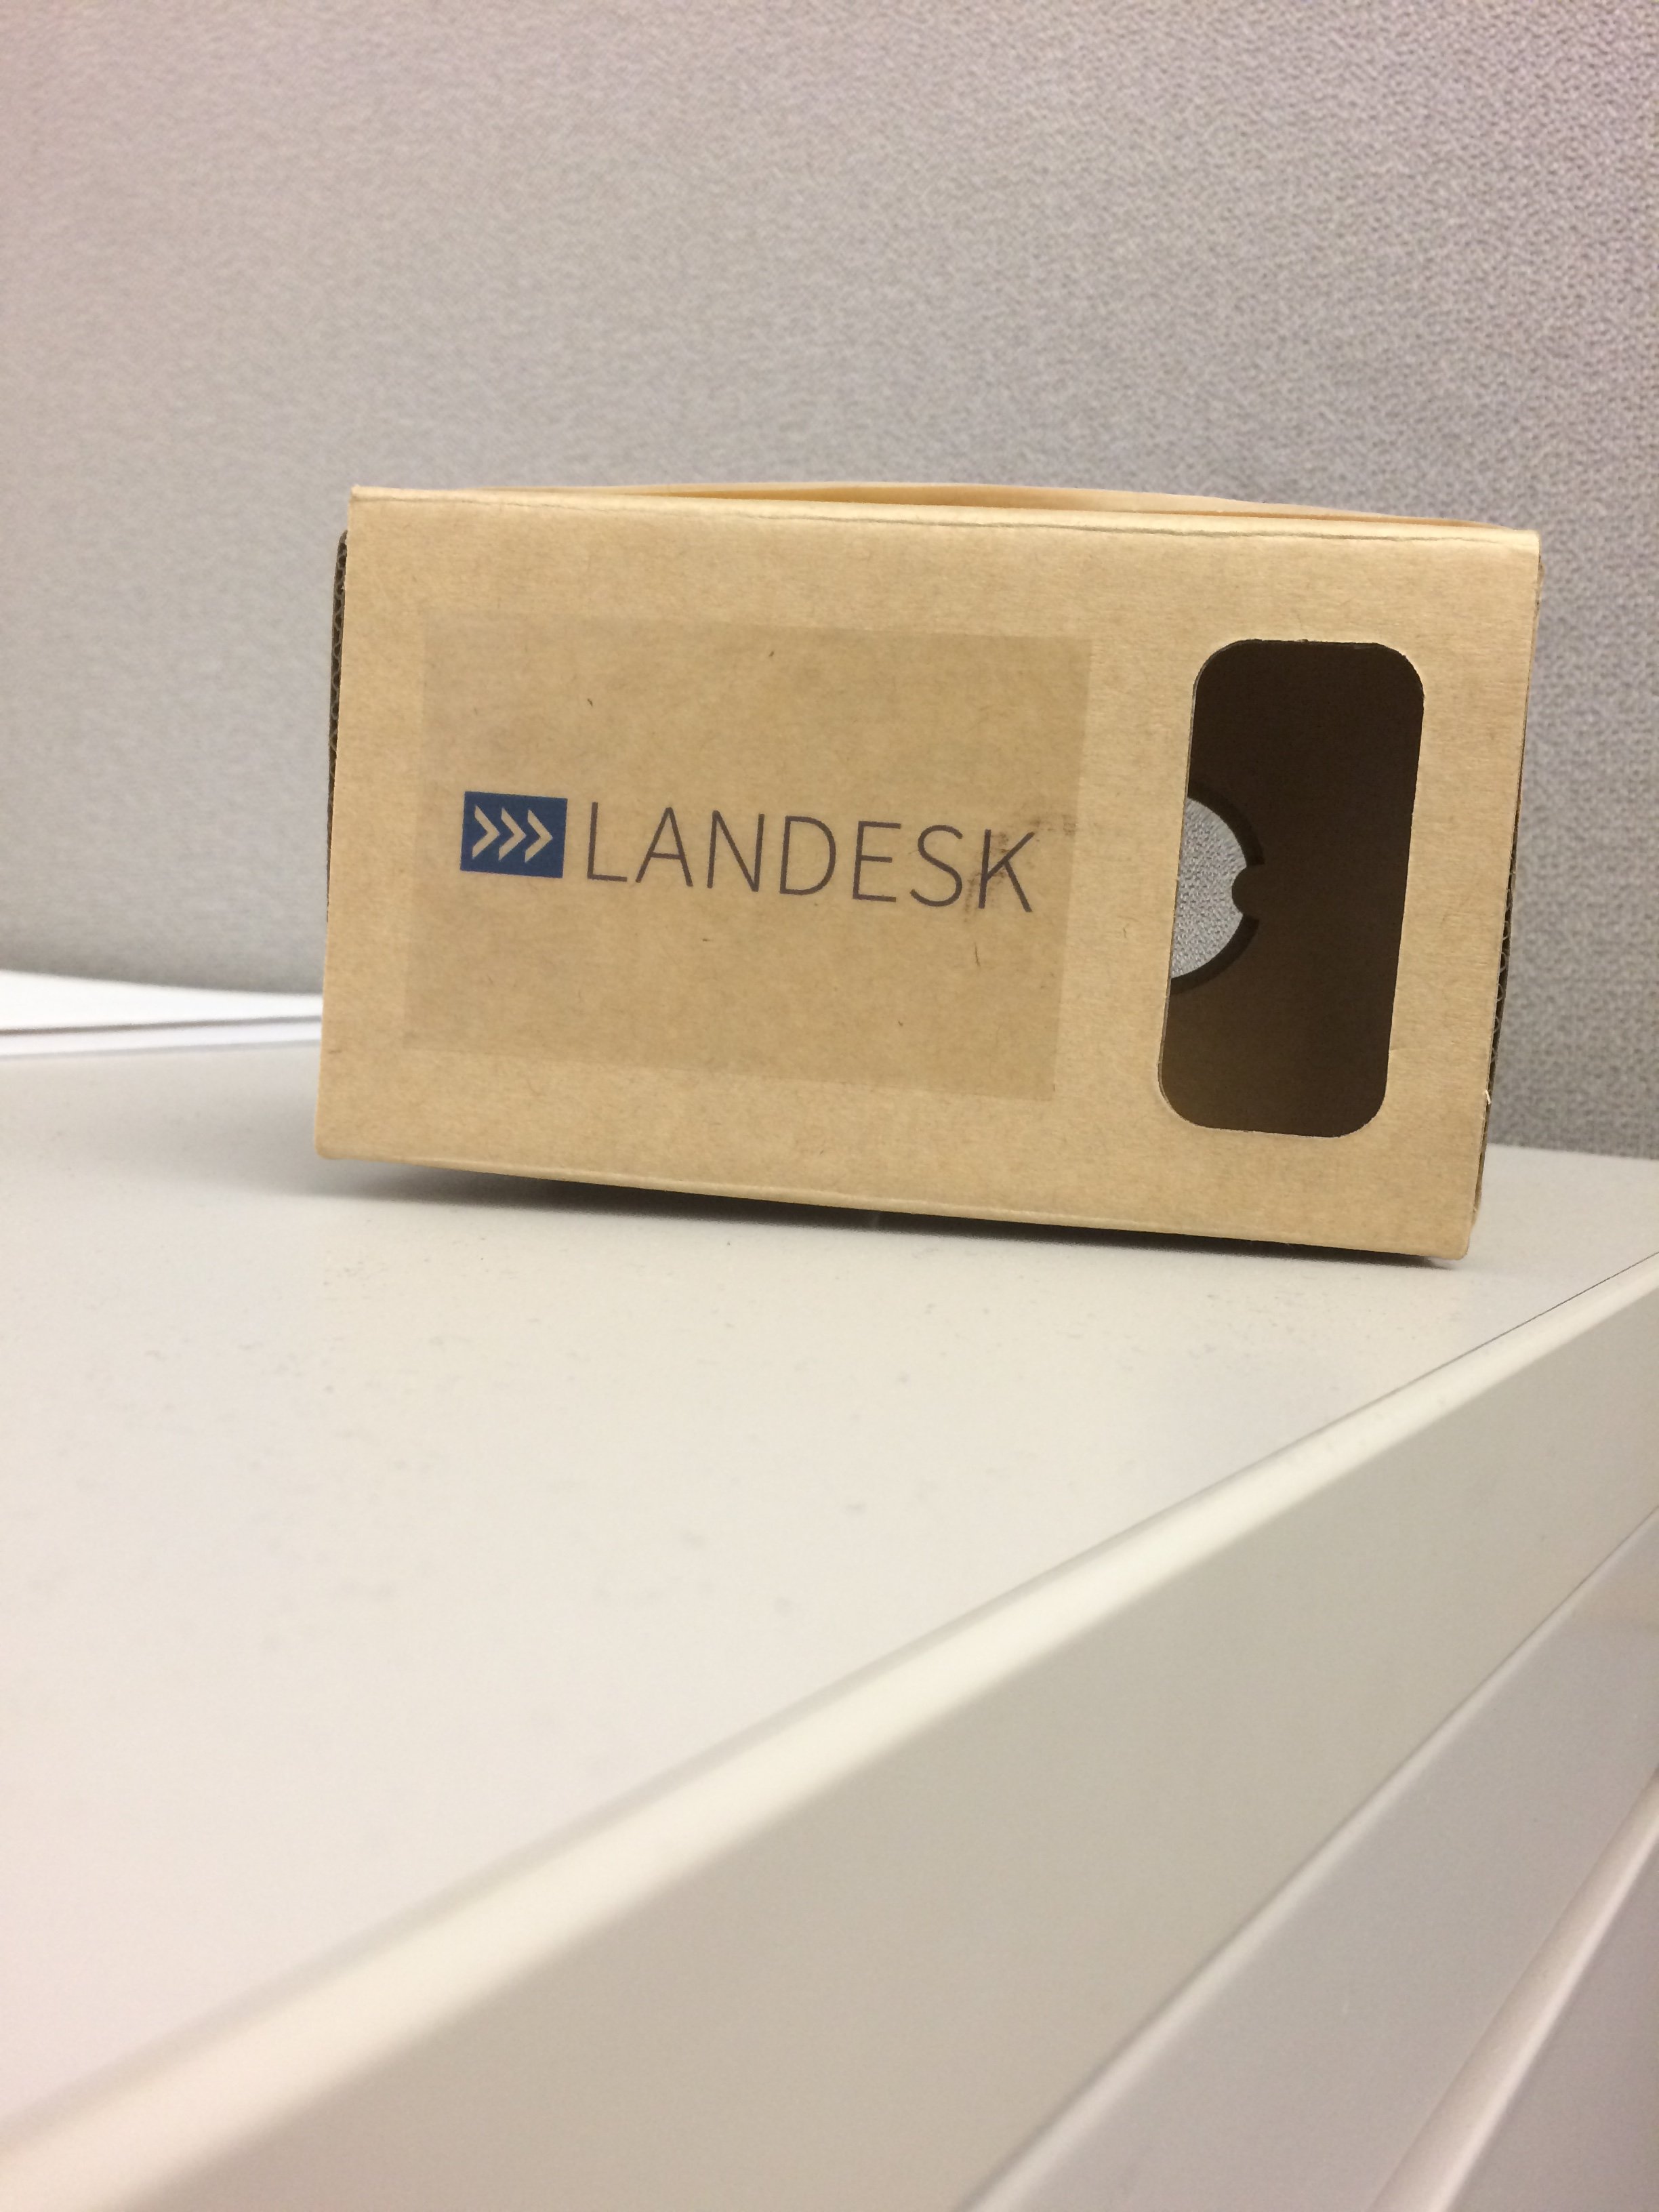 image of landesk cardboard box